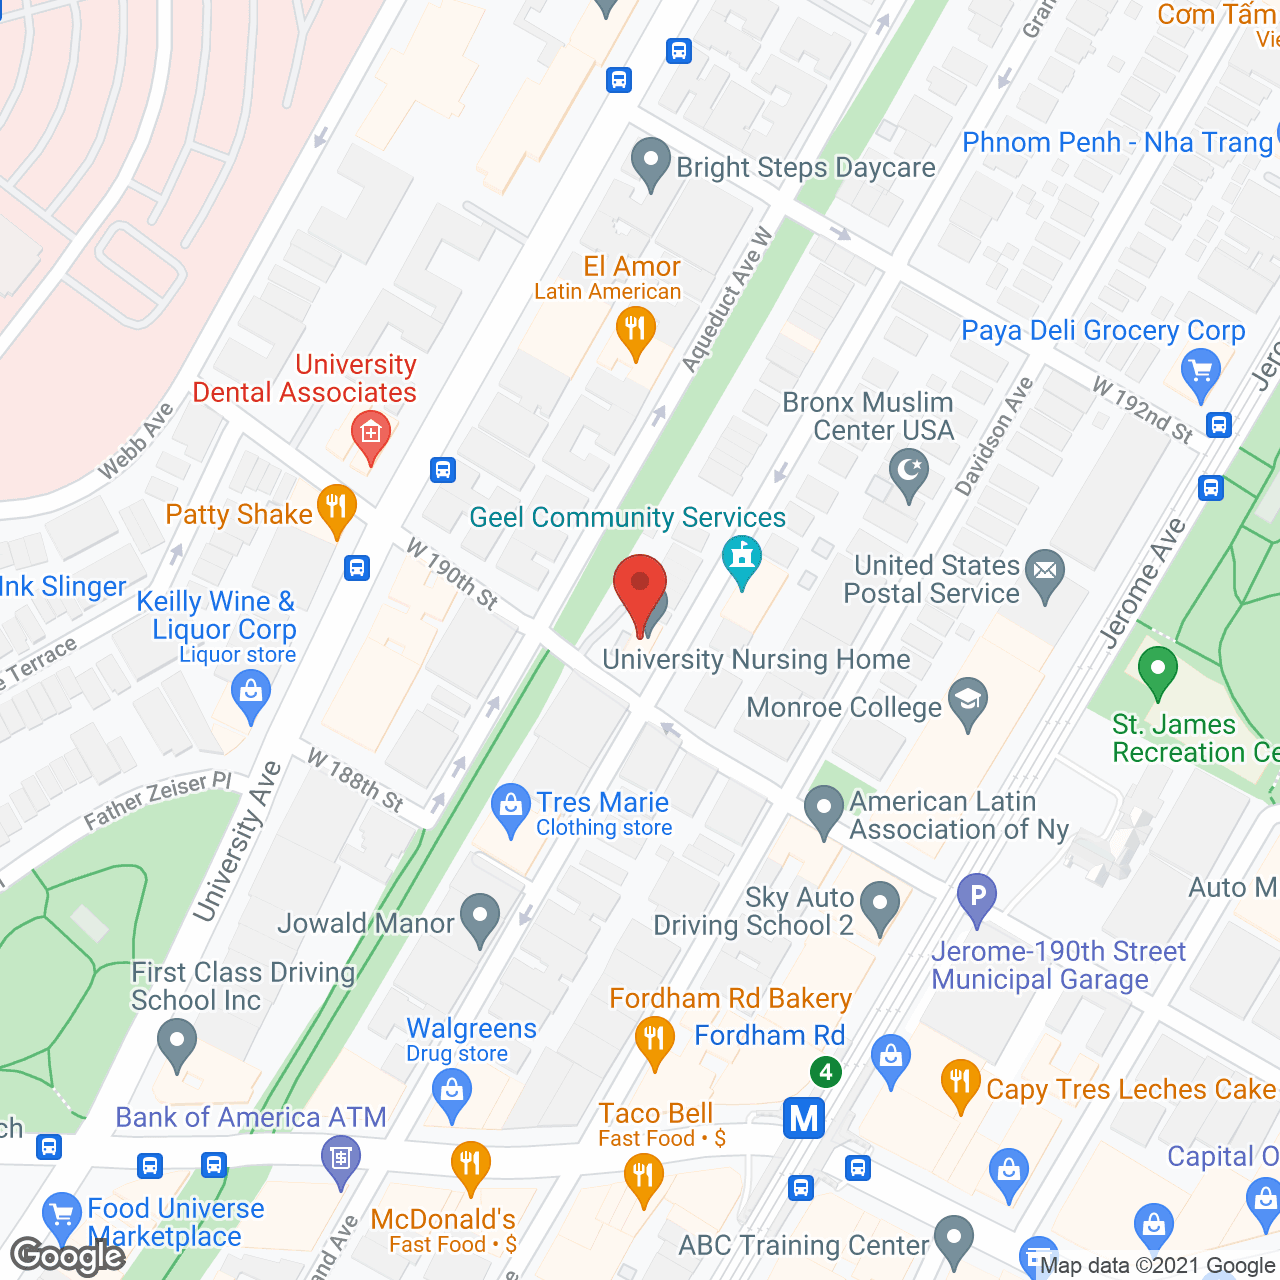 University Nursing Home in google map